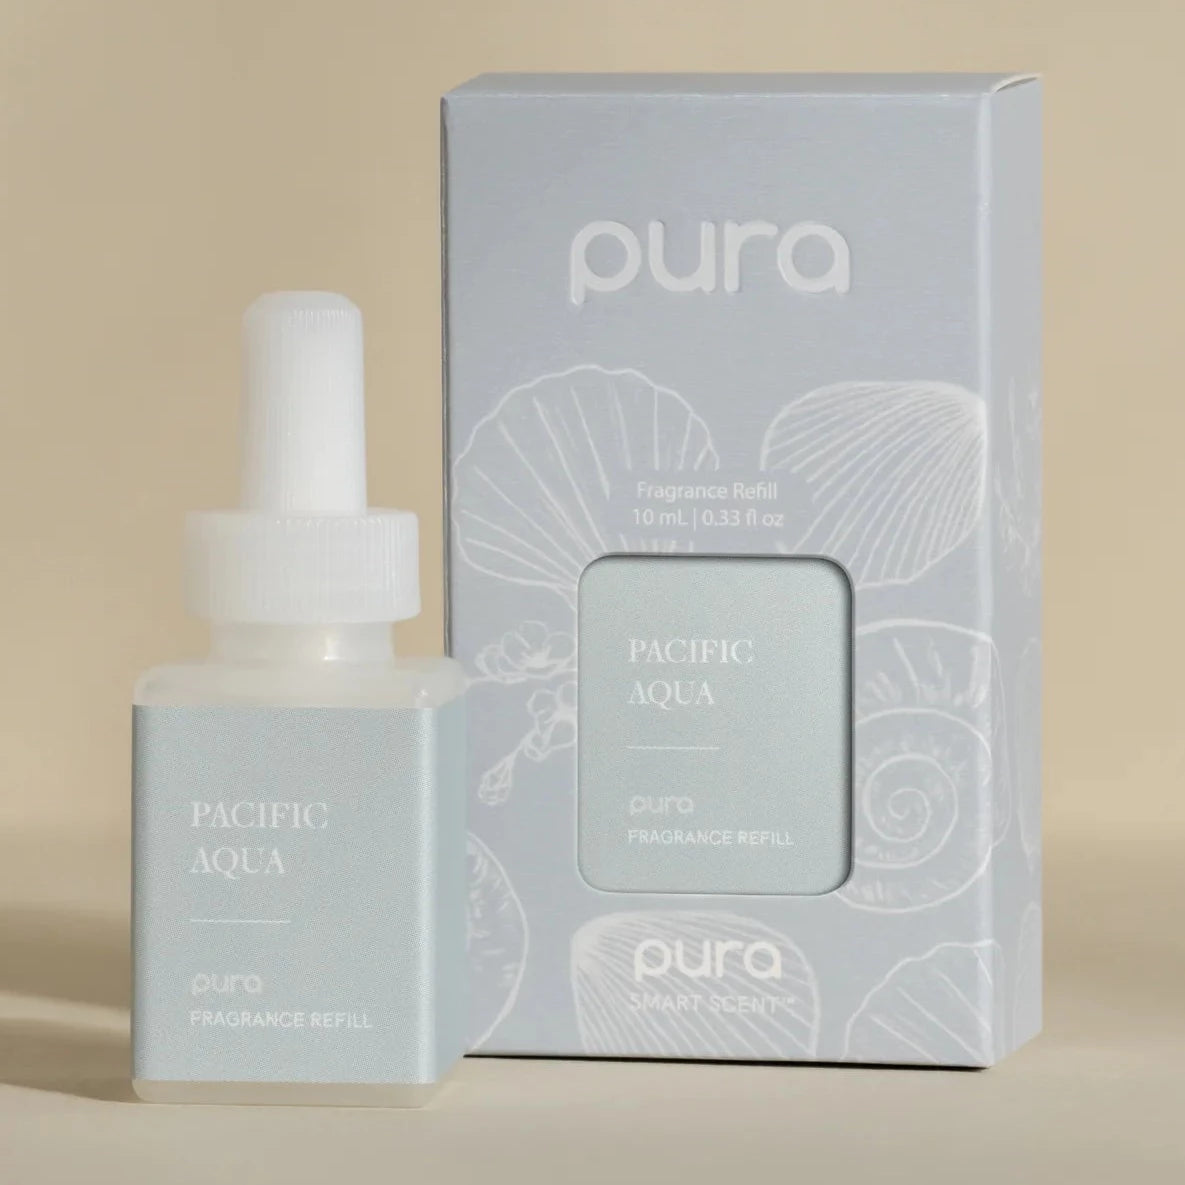 Pacific Aqua Pura Fragrance (by Pura) - The Preppy Bunny